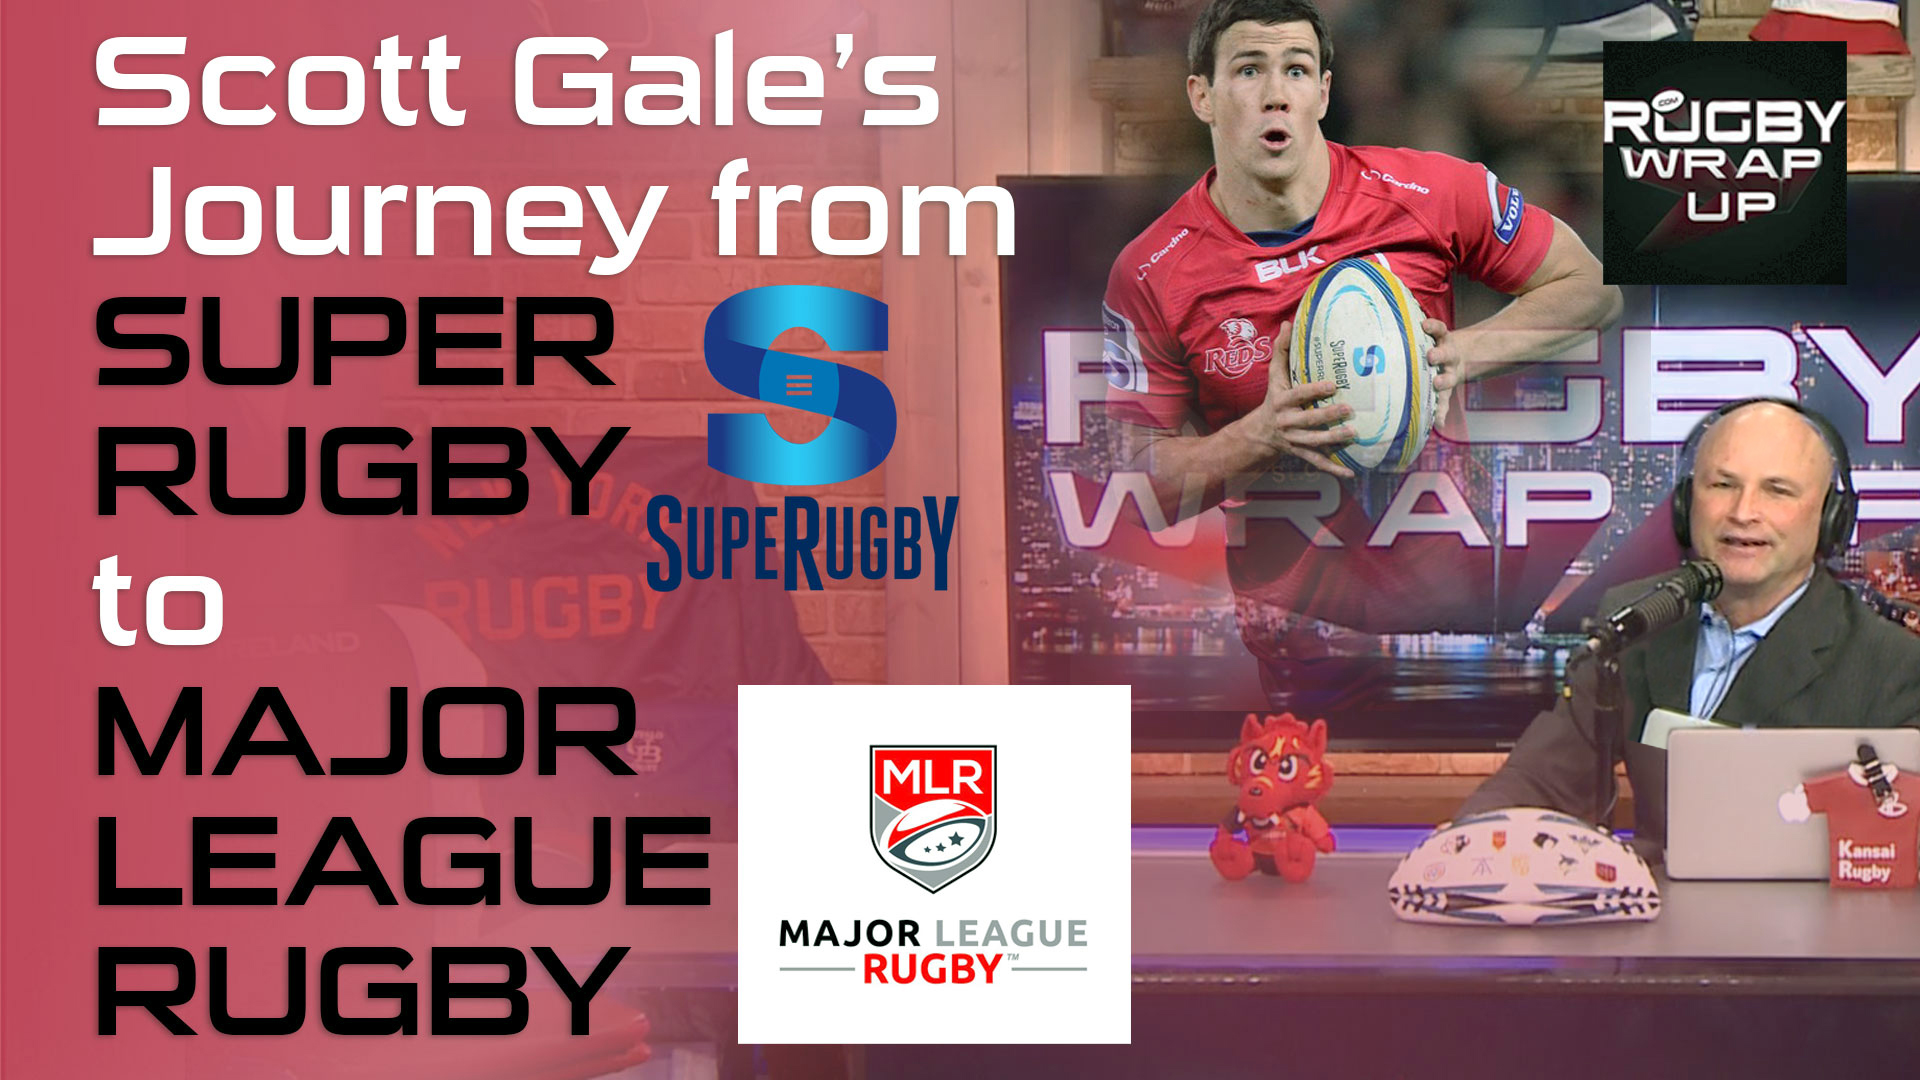 Scott_Gale,NOLA_Gold, SUPER_RUGBY, MAJOR-LEAGUE-RUGBY, Rugby_Wrap_Up, Matt_McCarthy, MLR